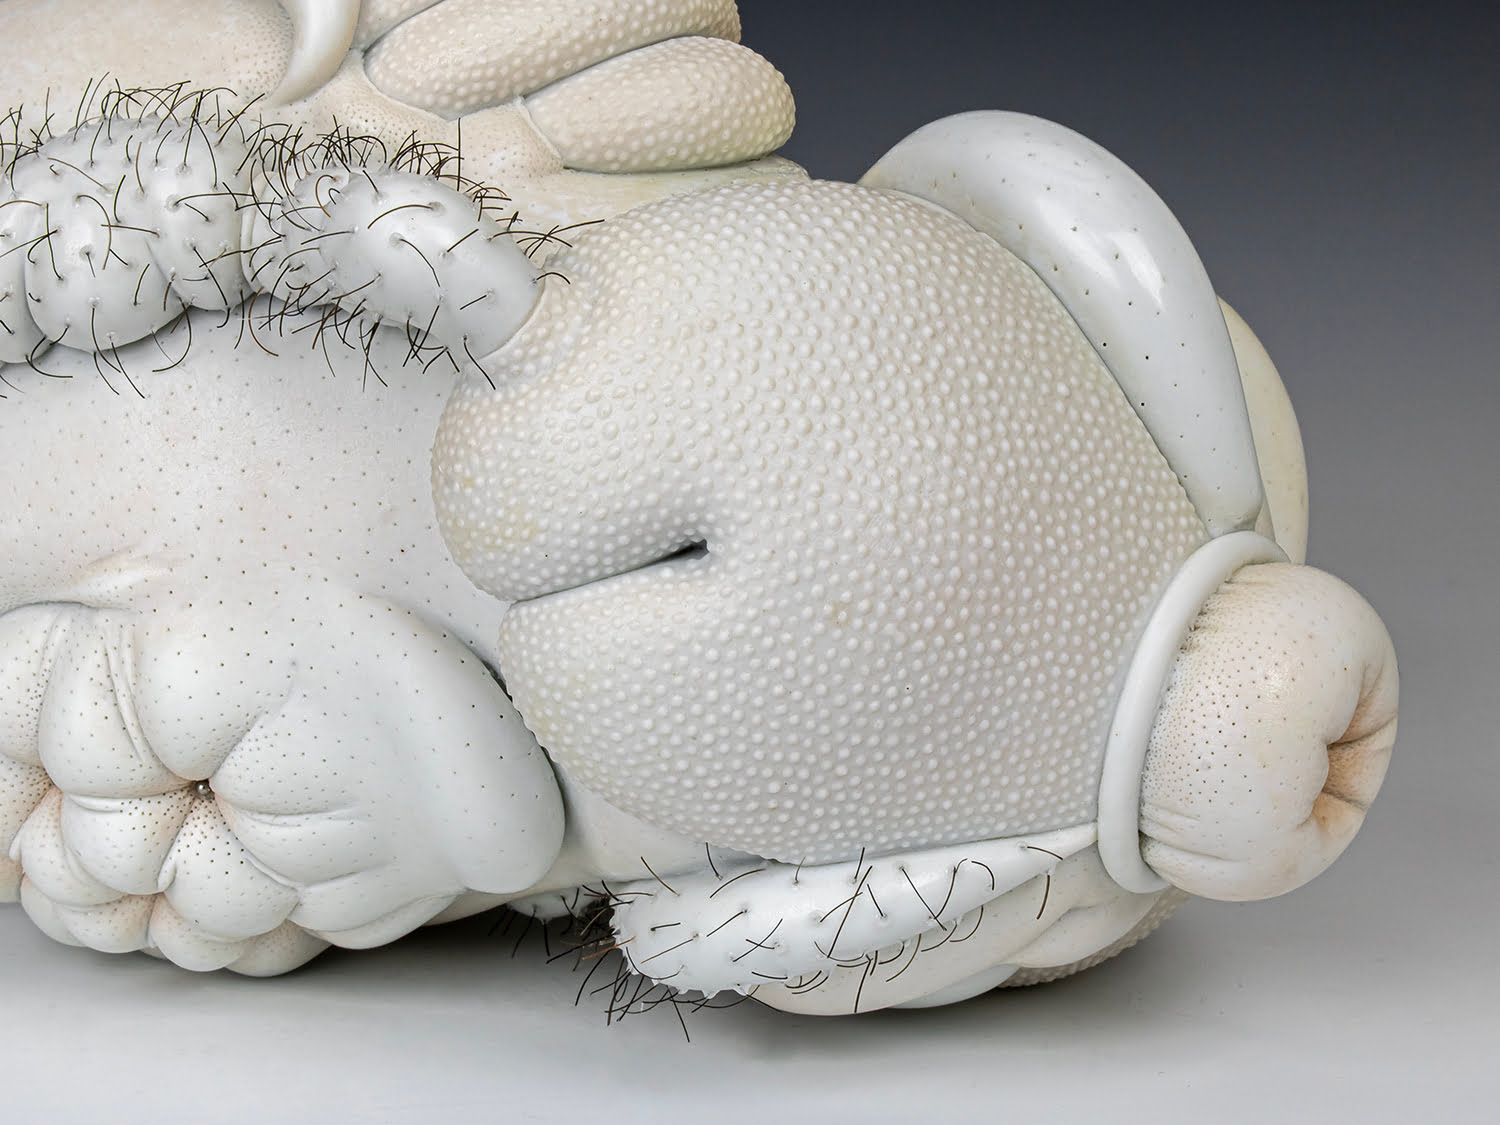 Jason Briggs "Ventura" (detail 3). porcelain and mixed media sculpture ceramics.